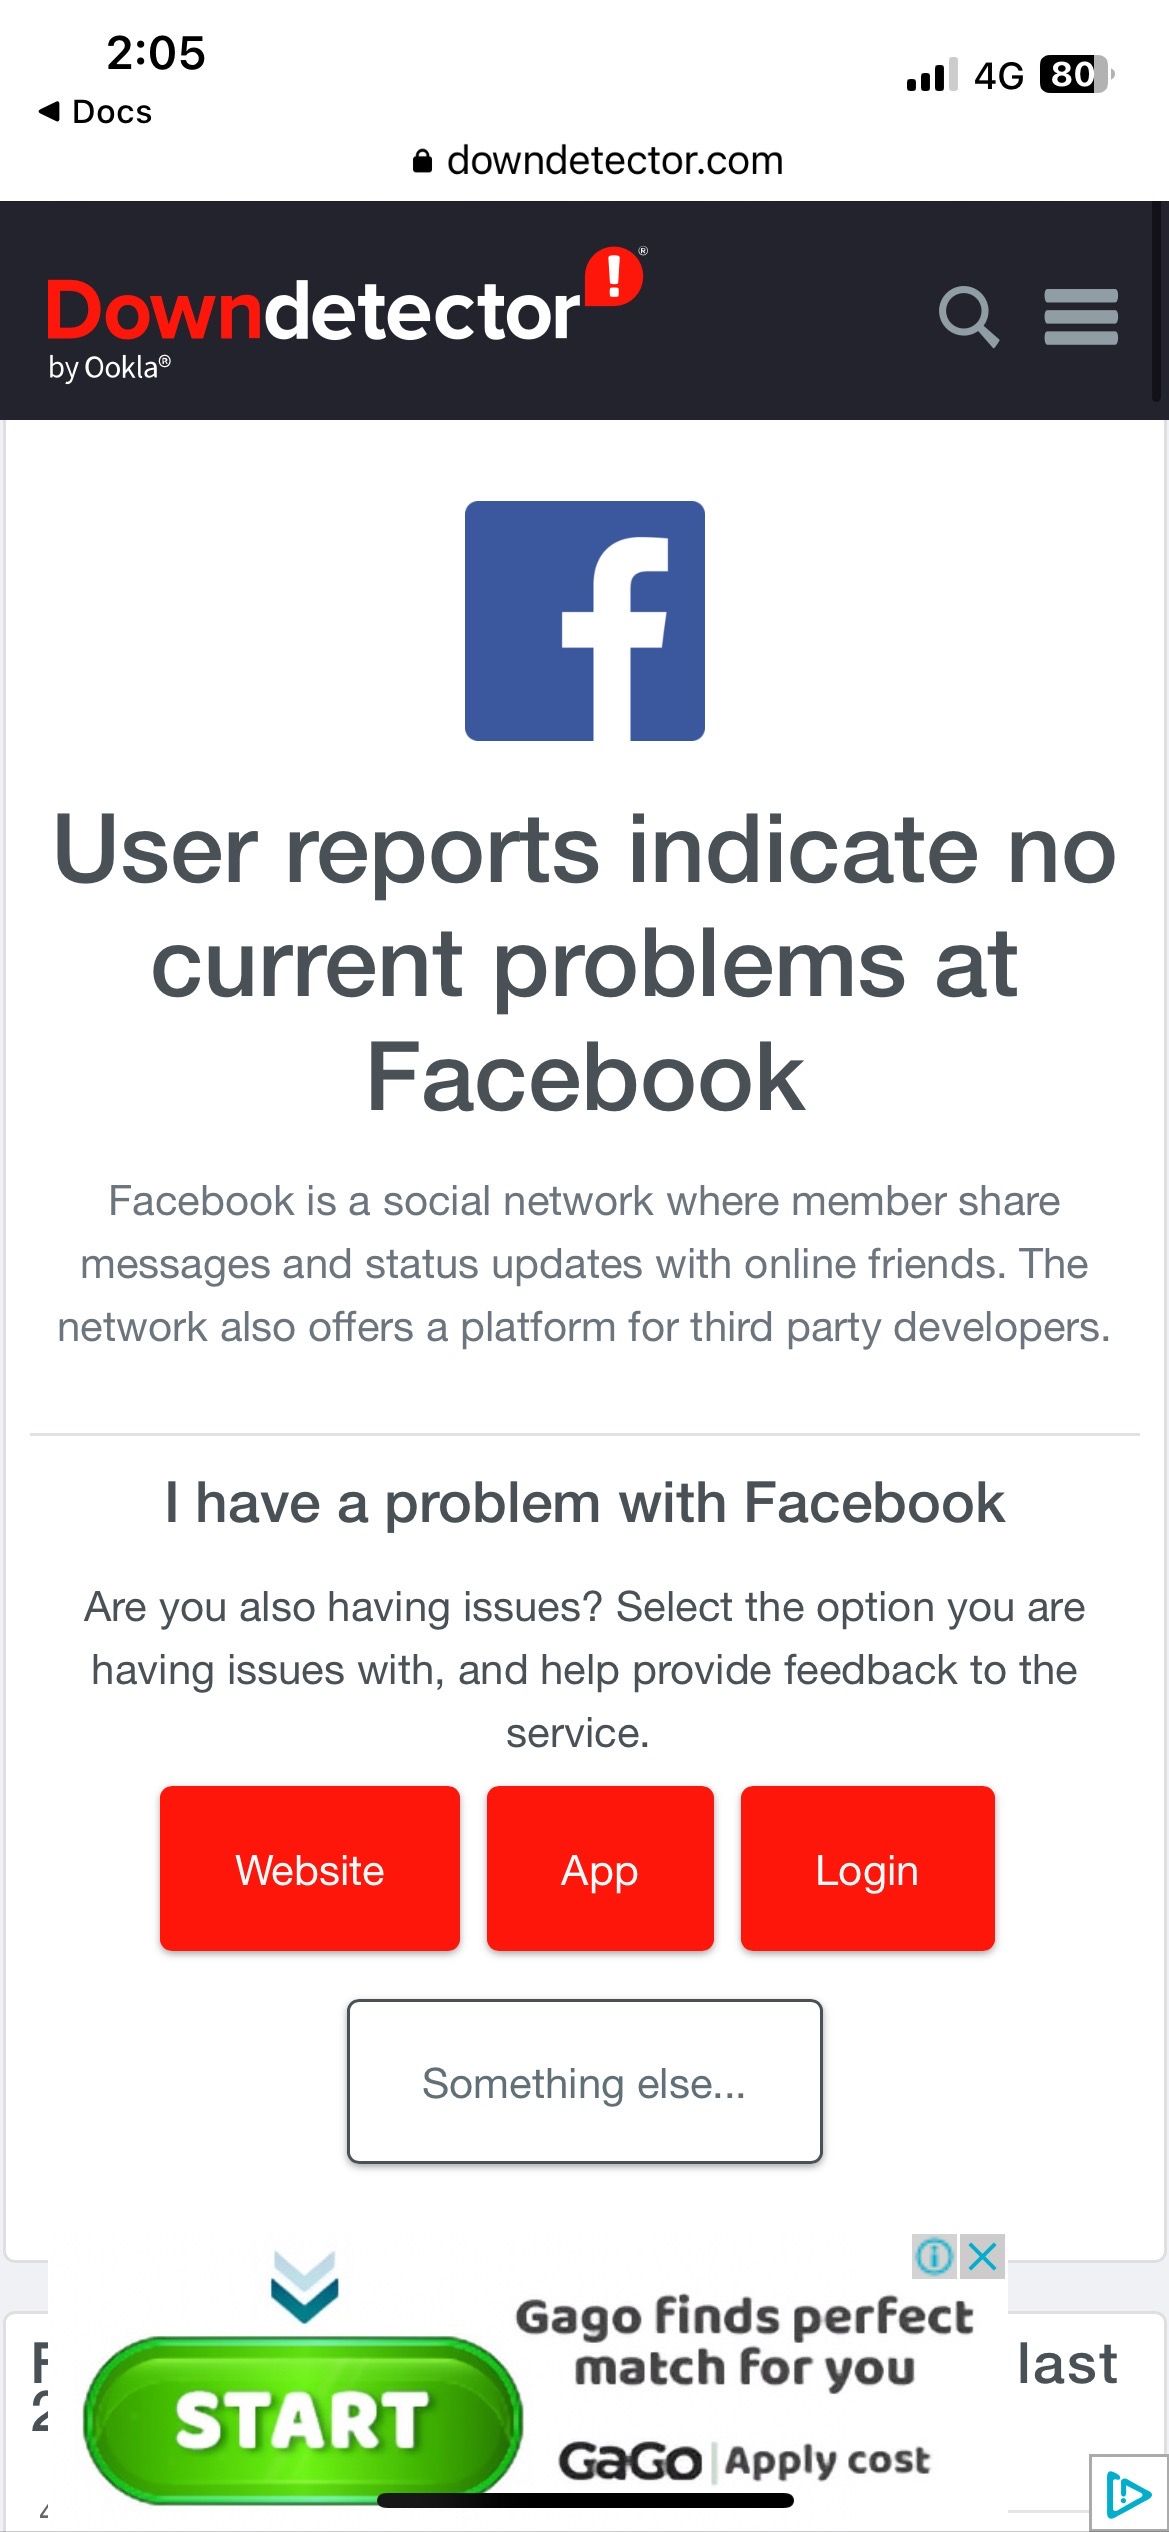 No current problems at Facebook